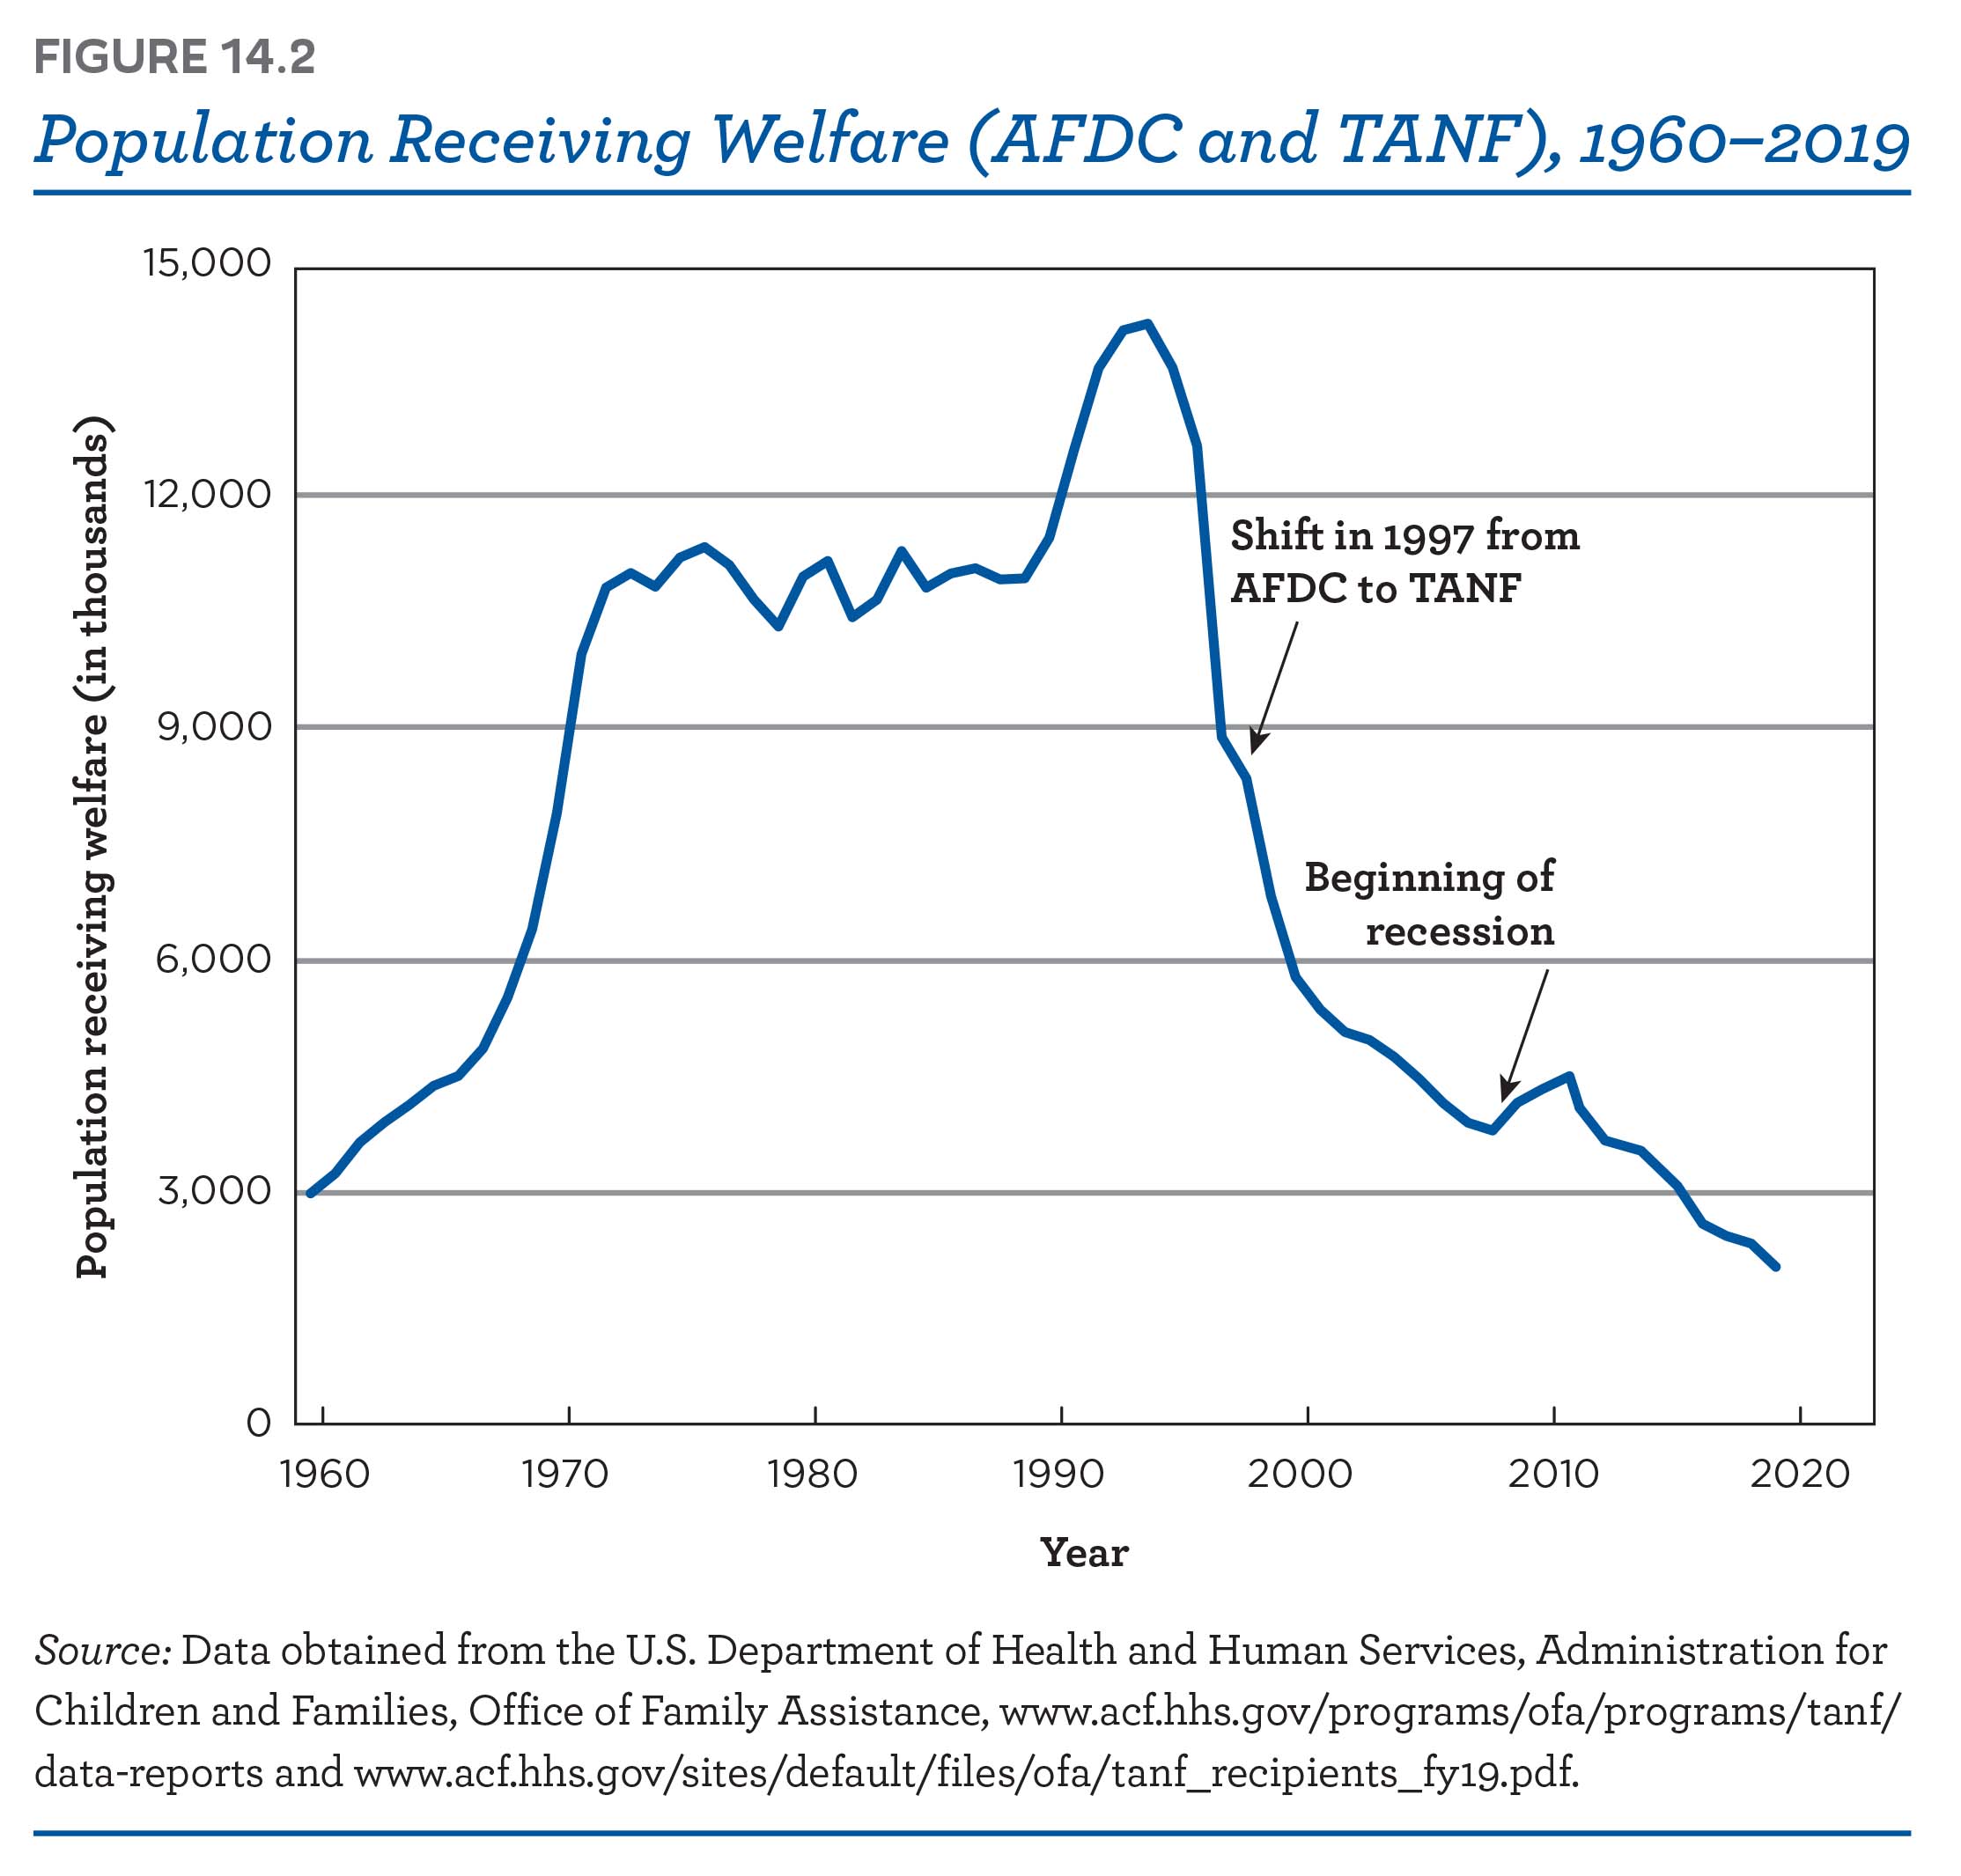 Population receiving welfare, 1960-2020